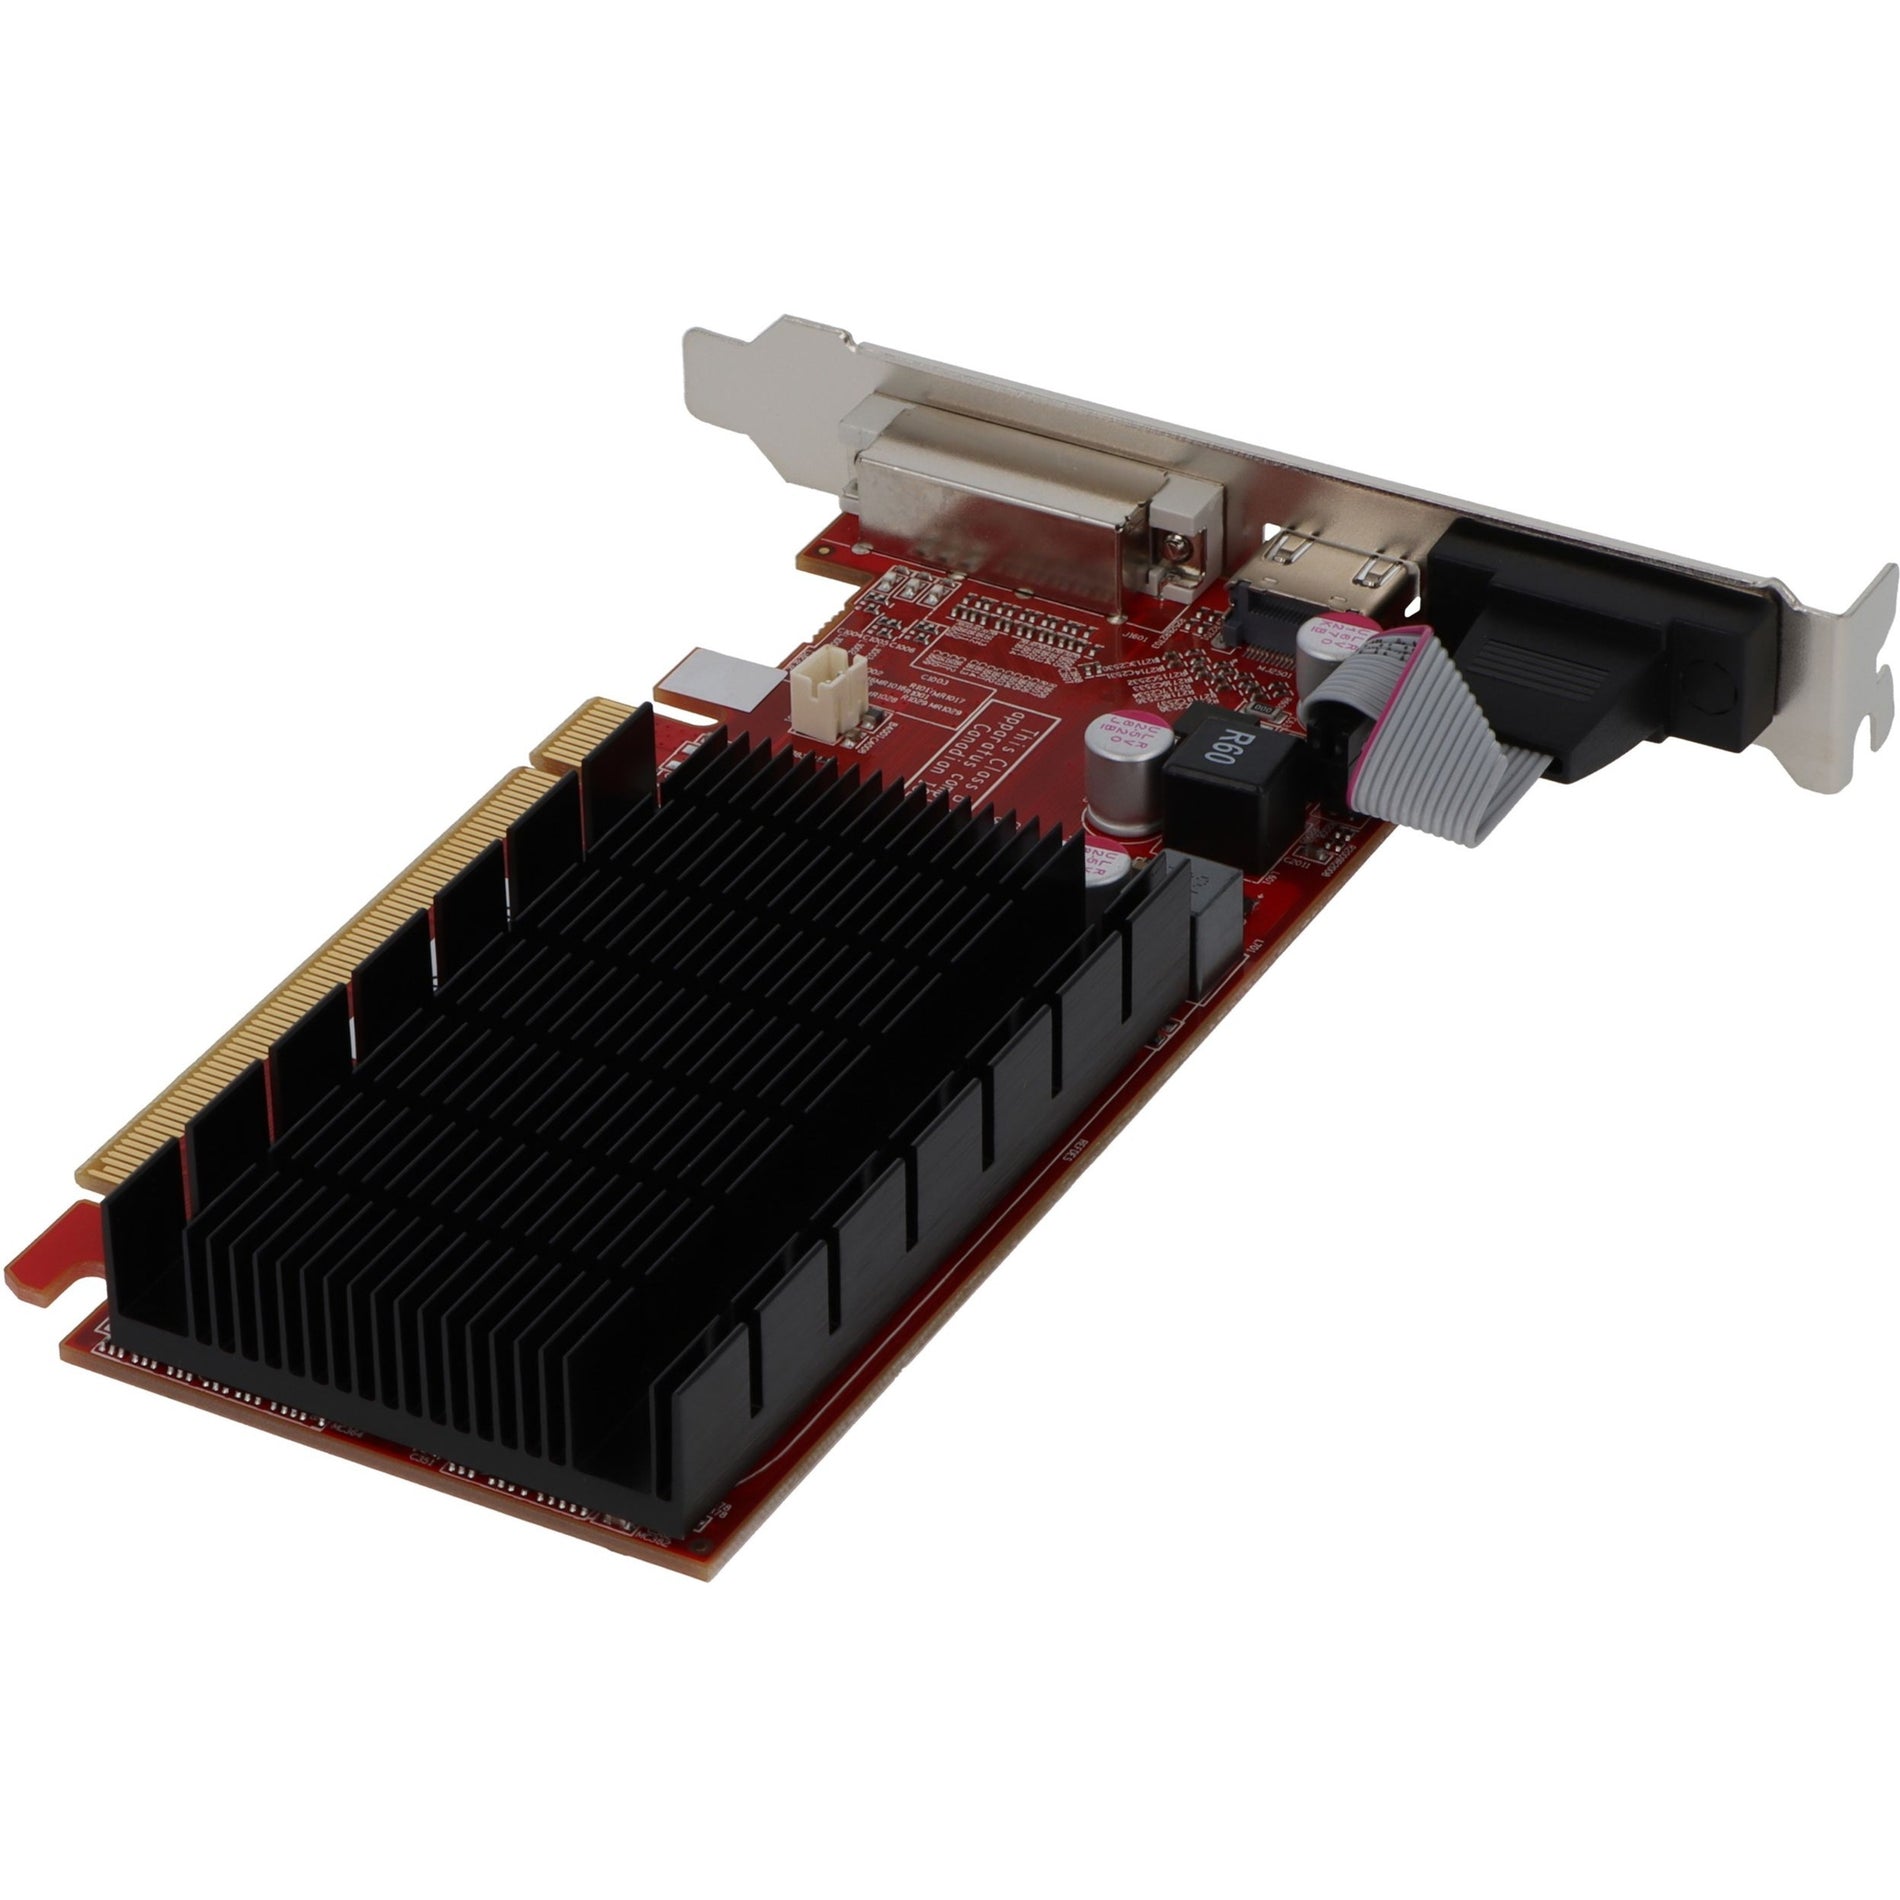 VisionTek 900861 AMD Radeon 5450 Graphic Card, 2GB DDR3, DVI-I, HDMI, VGA